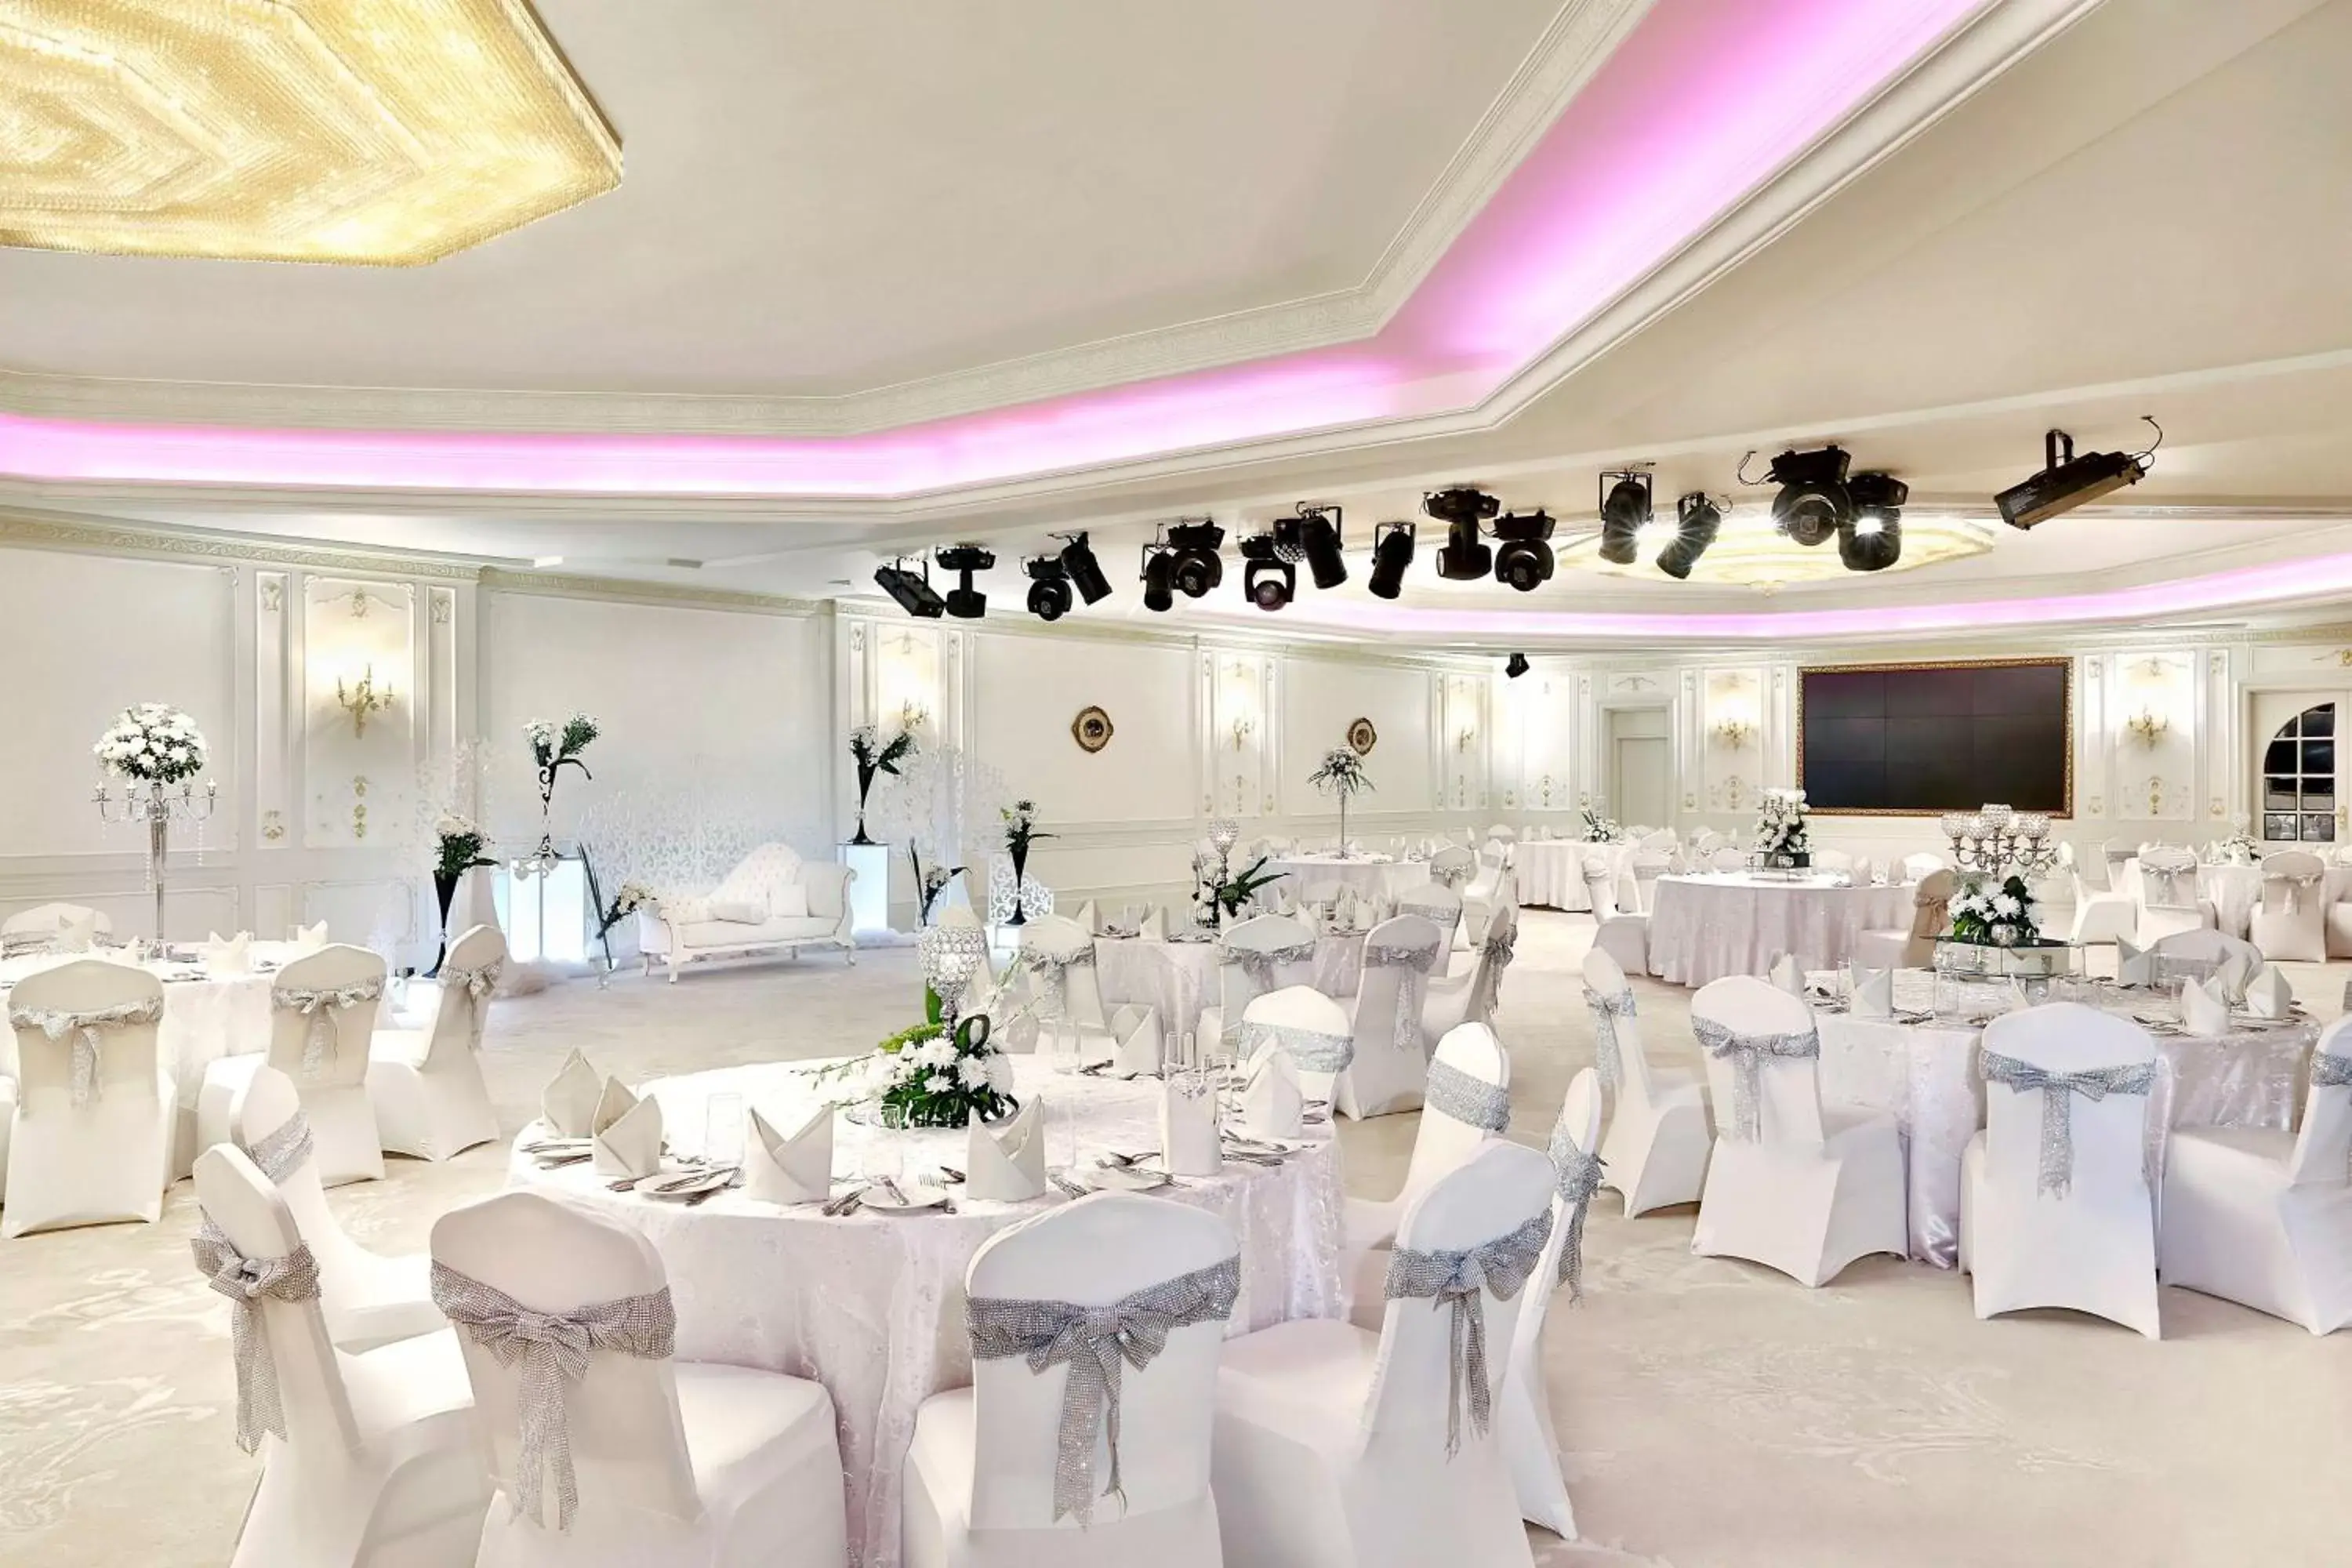 Meeting/conference room, Banquet Facilities in Hilton Alexandria Corniche